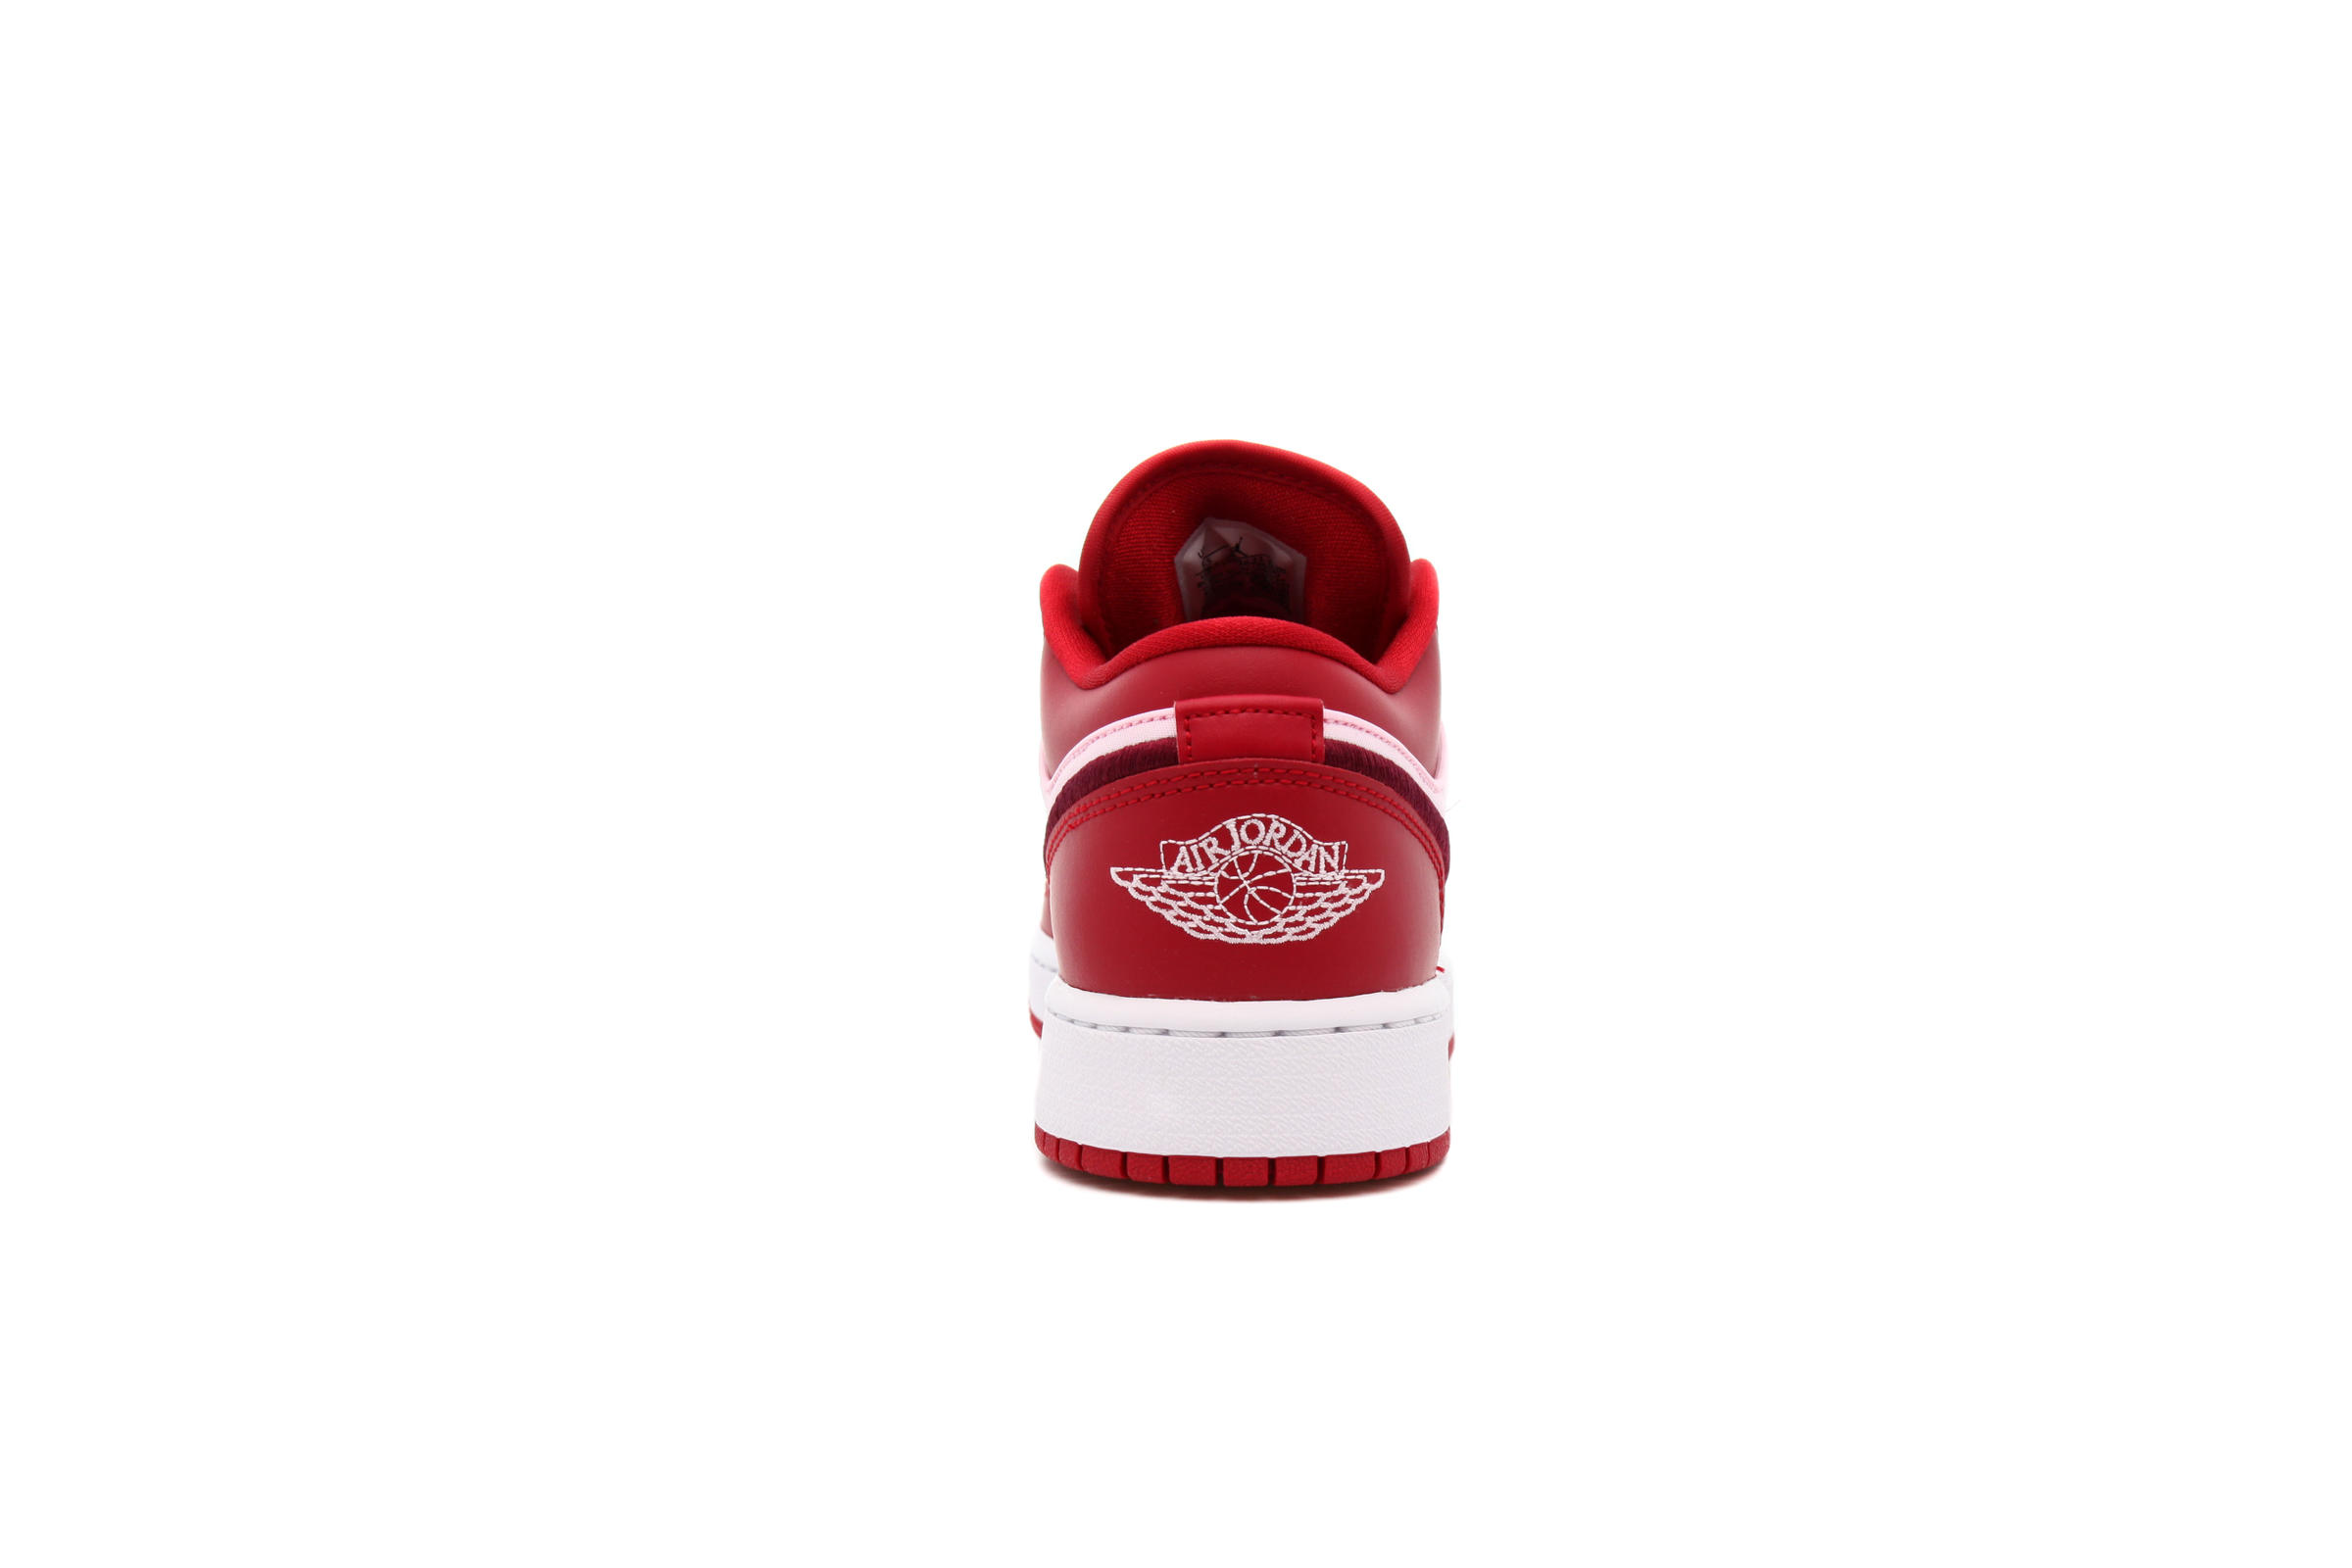 Air Jordan 1 LOW SE (GS) "GYM RED"